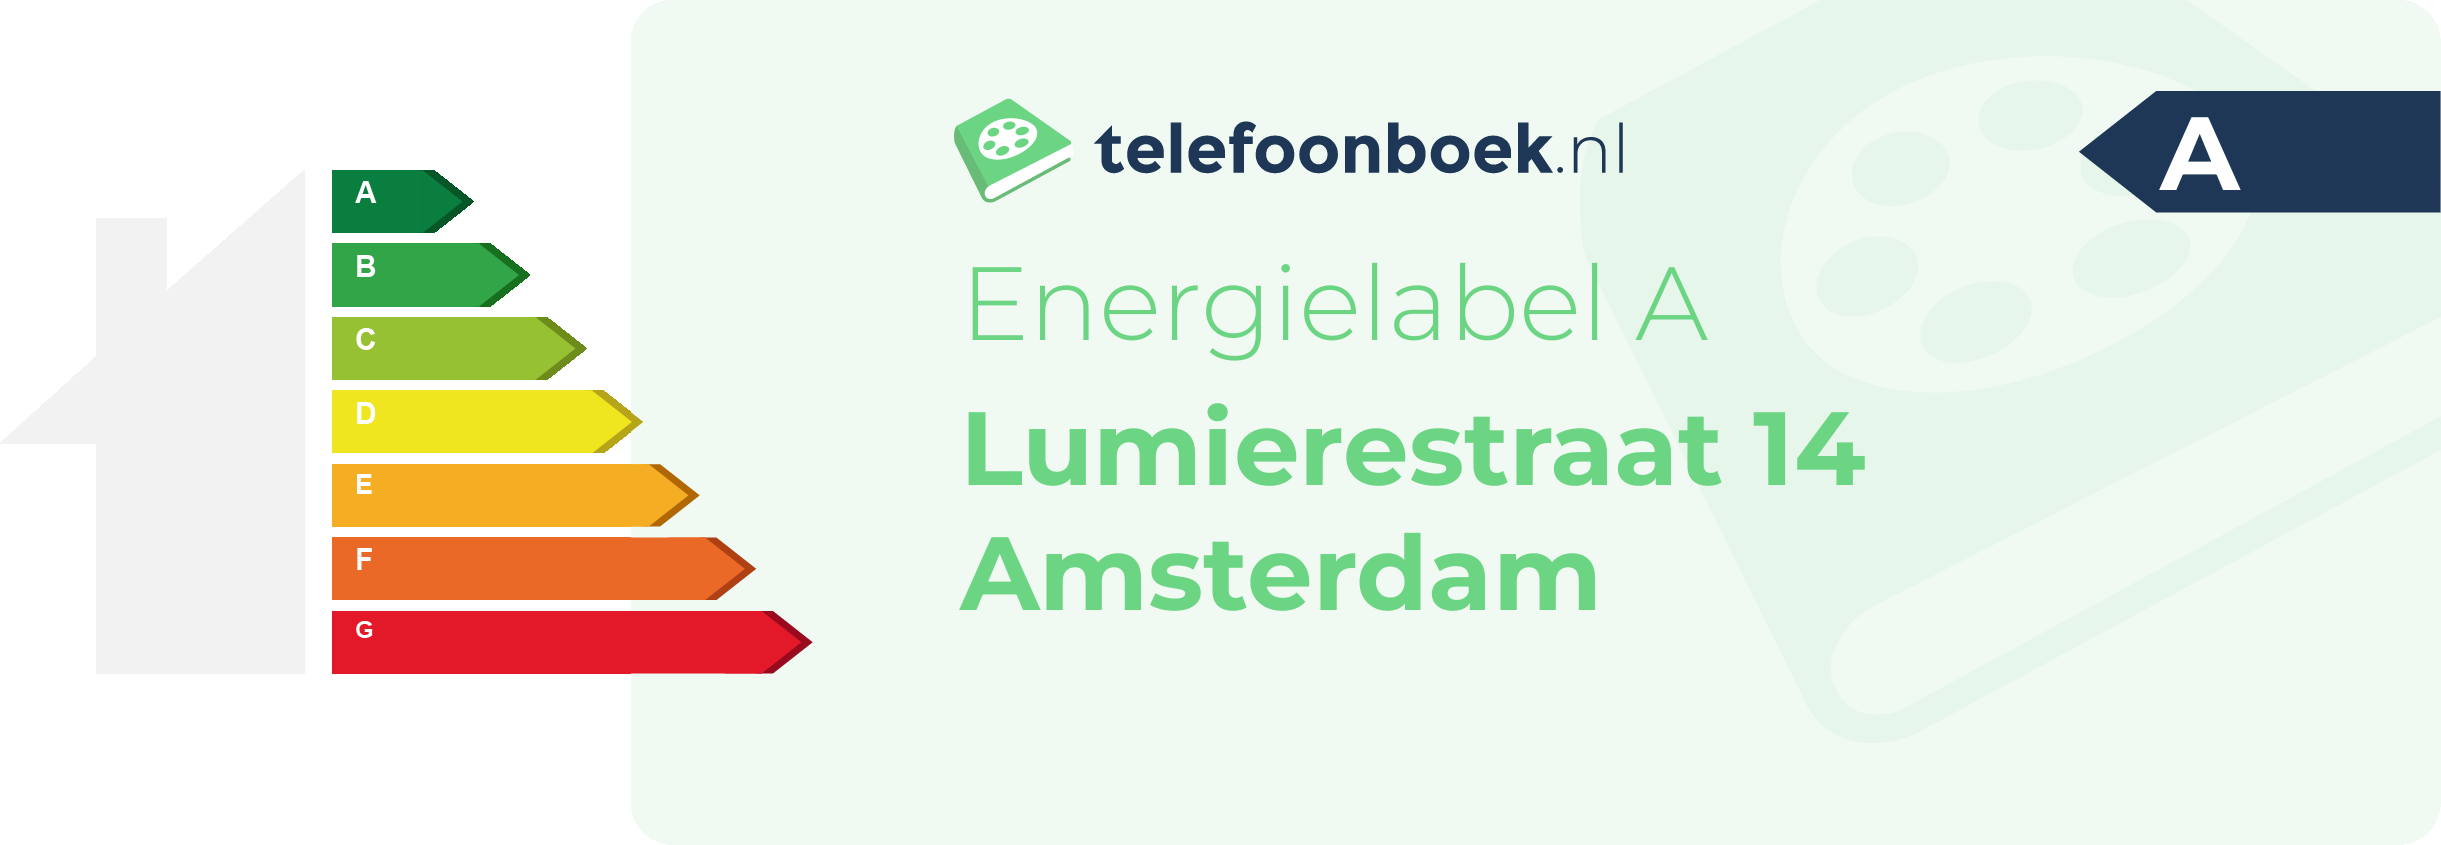 Energielabel Lumierestraat 14 Amsterdam